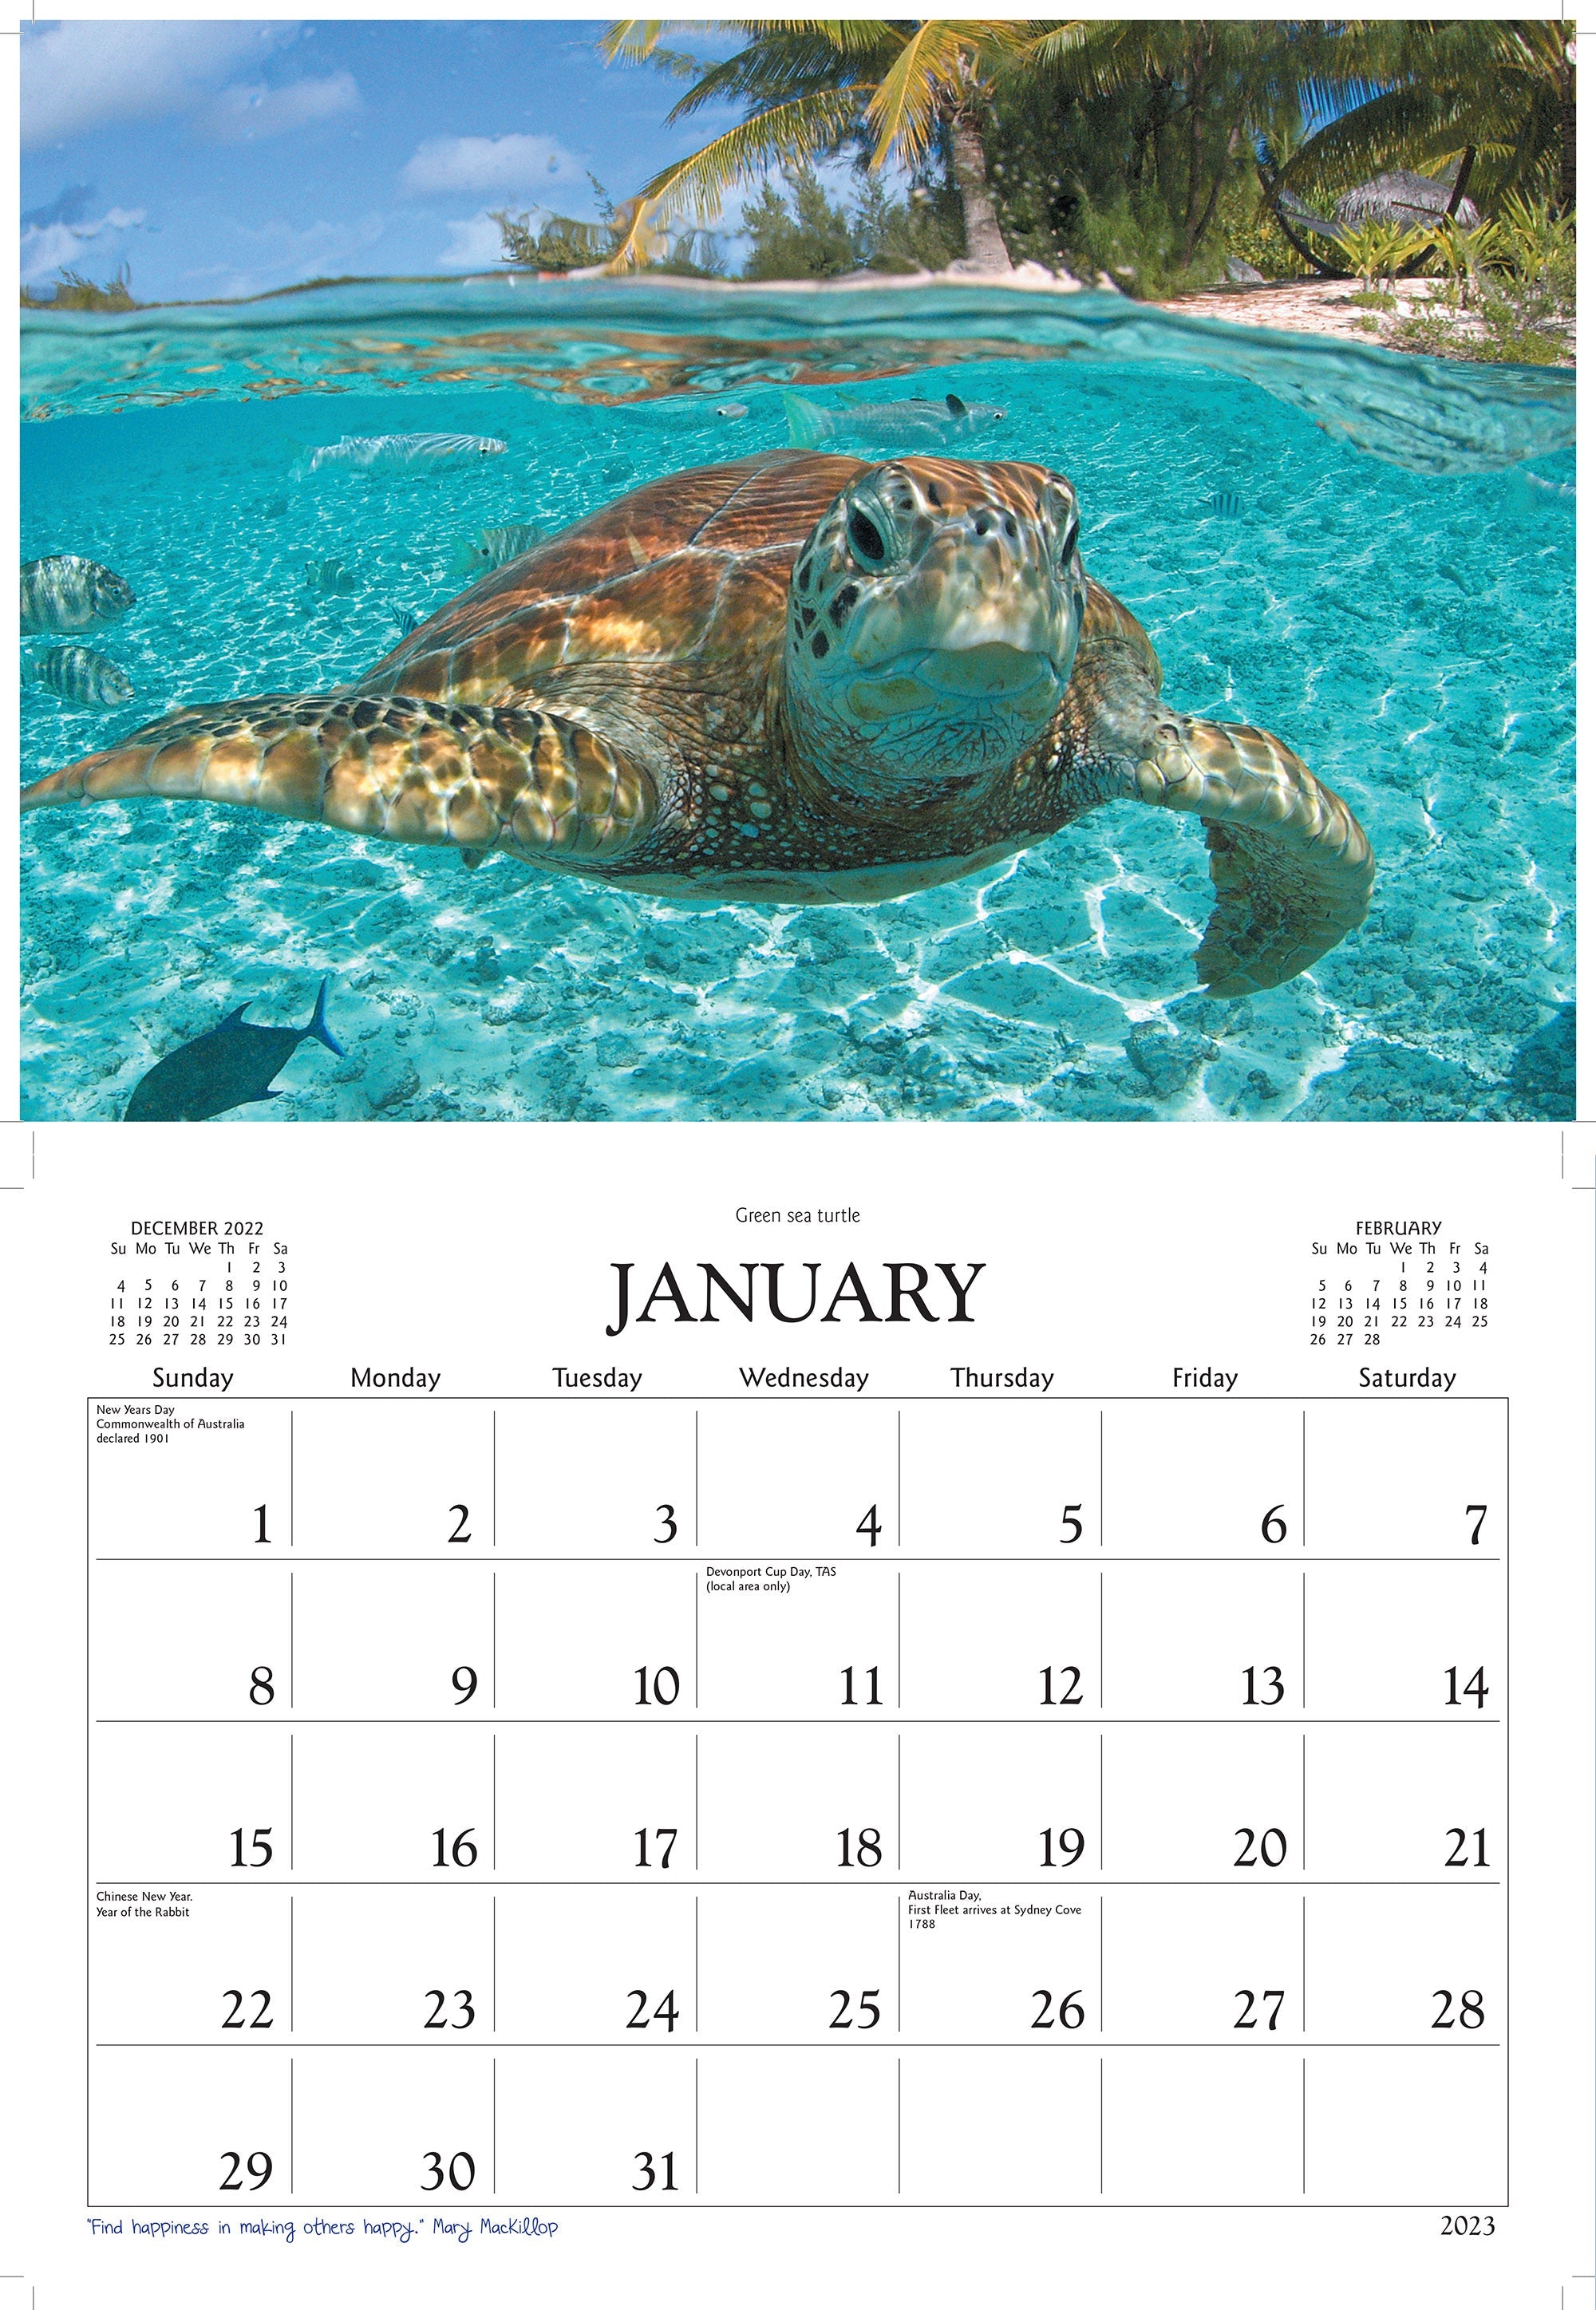 2023 Great Barrier Reef by David Messent - Horizontal Wall Calendar